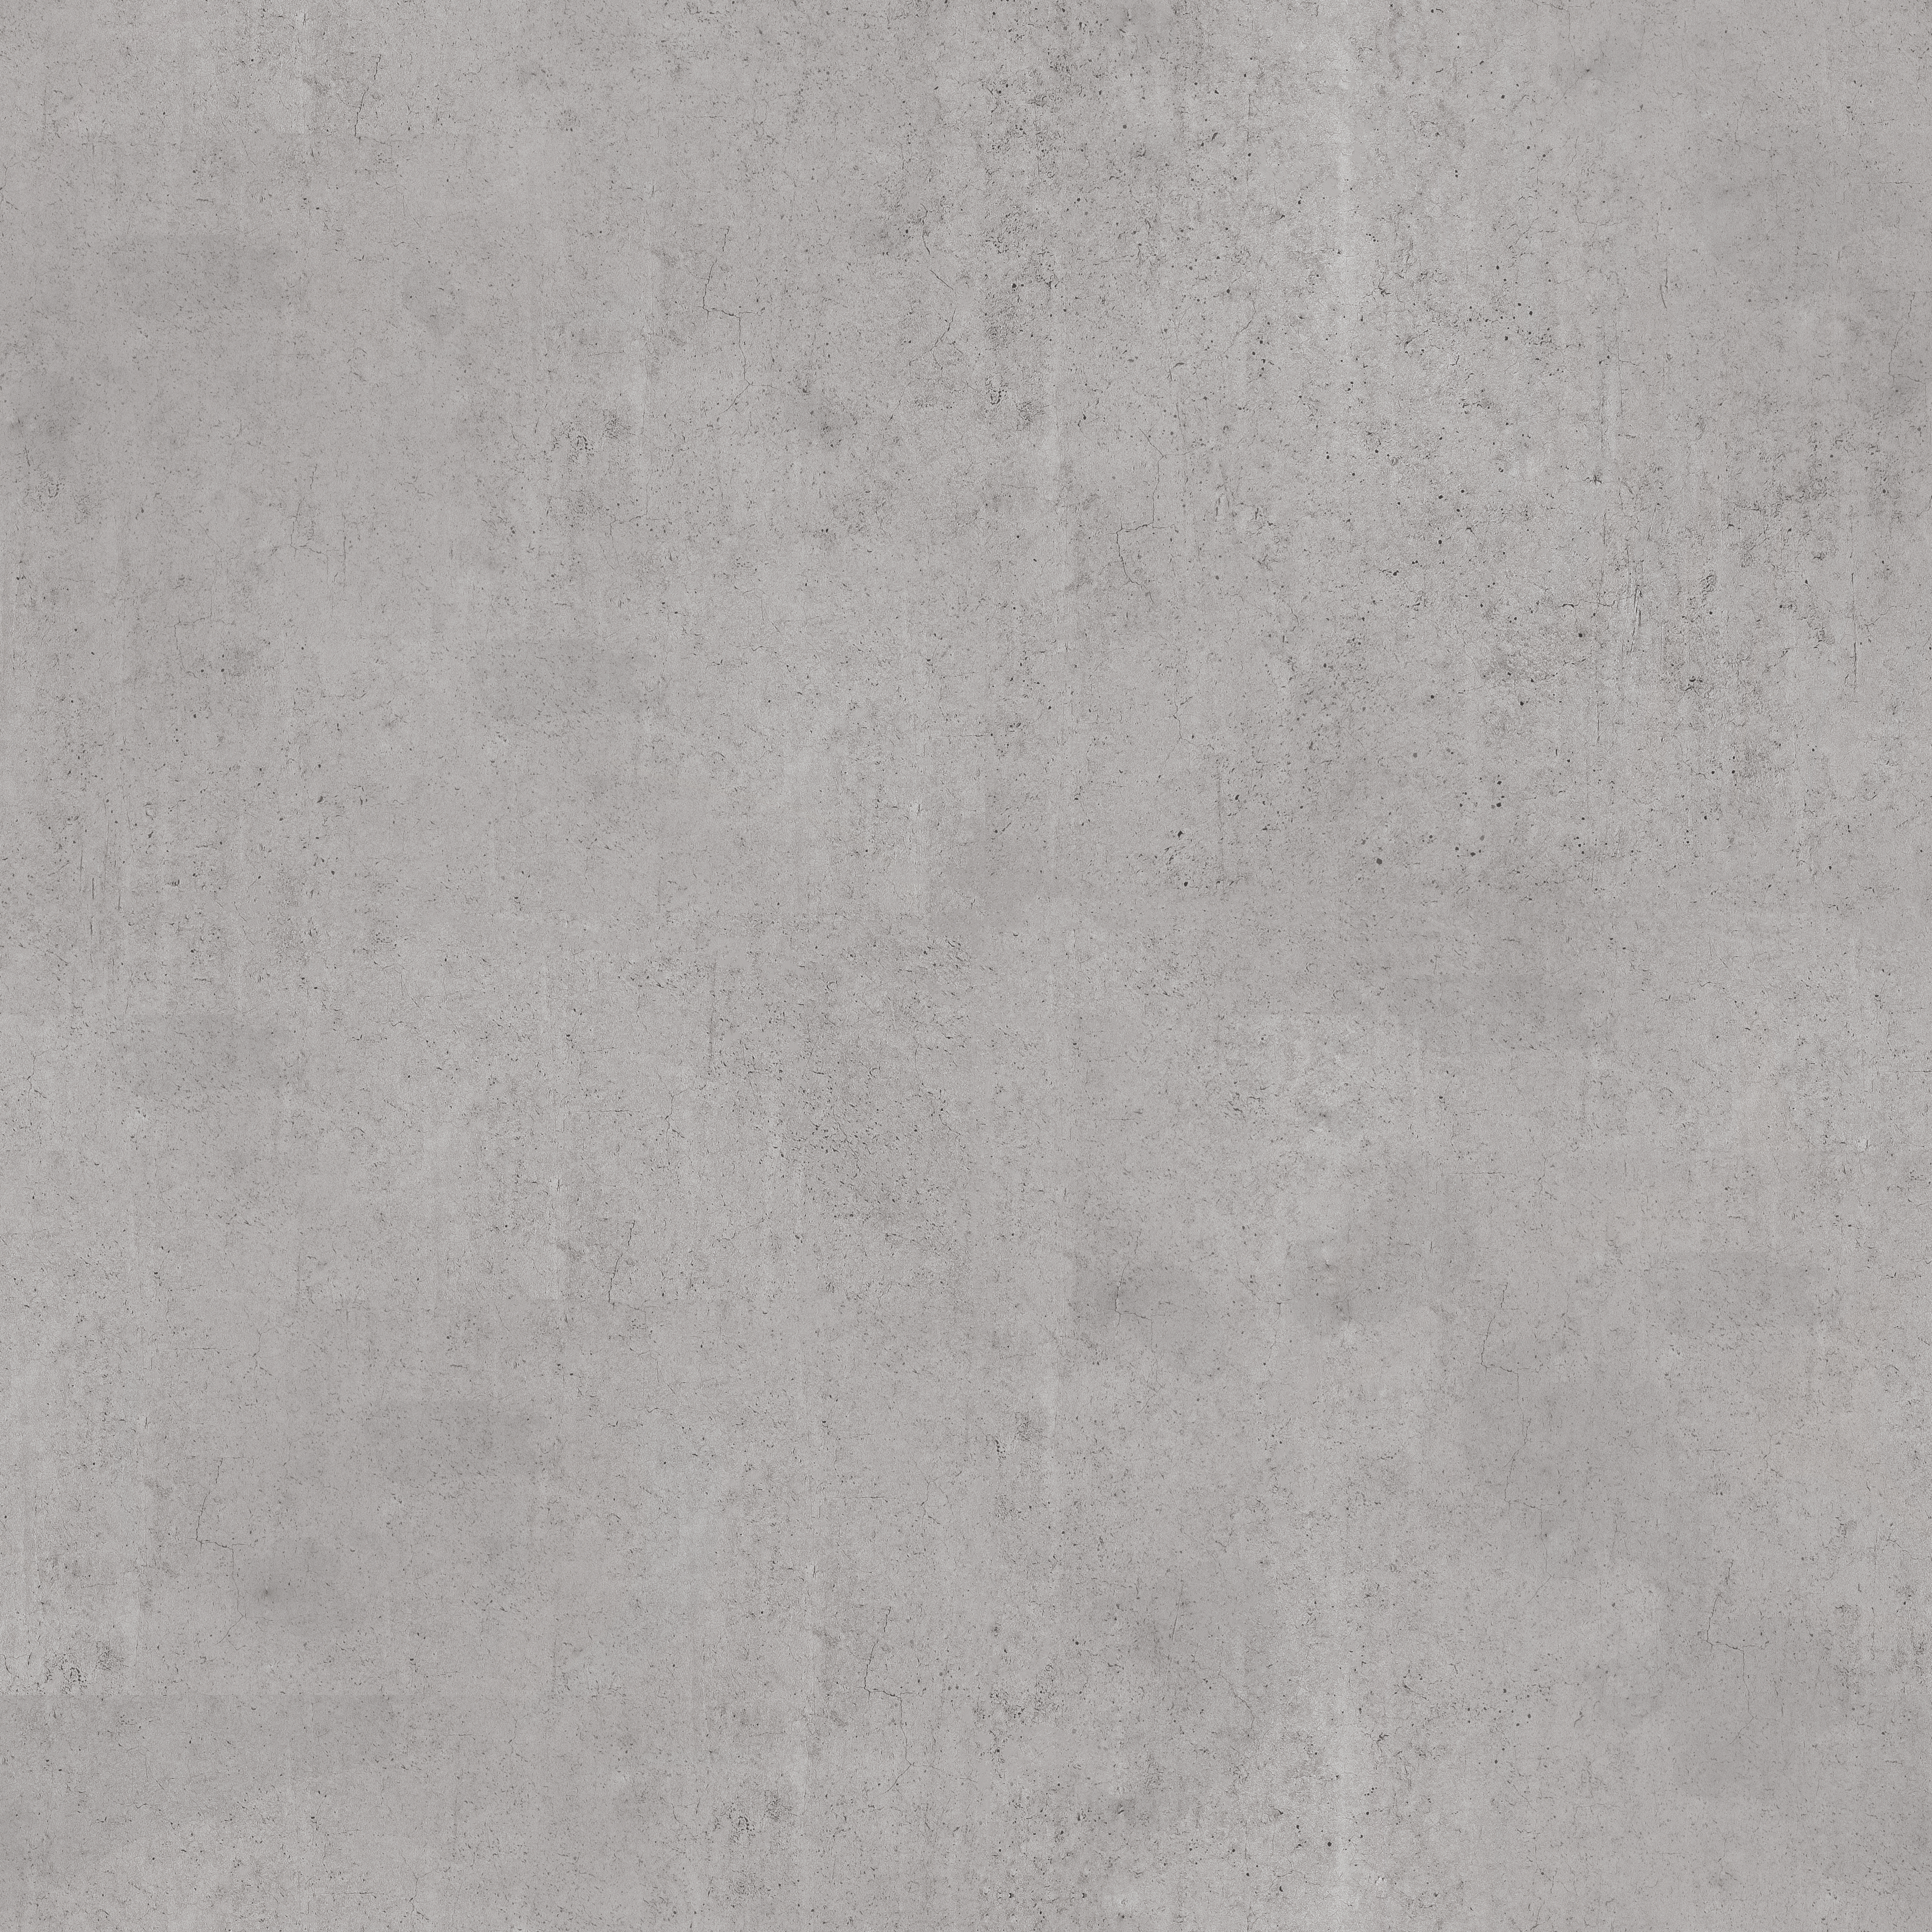 Natural Concrete Wallpaper, 2' x 10' - Image 1